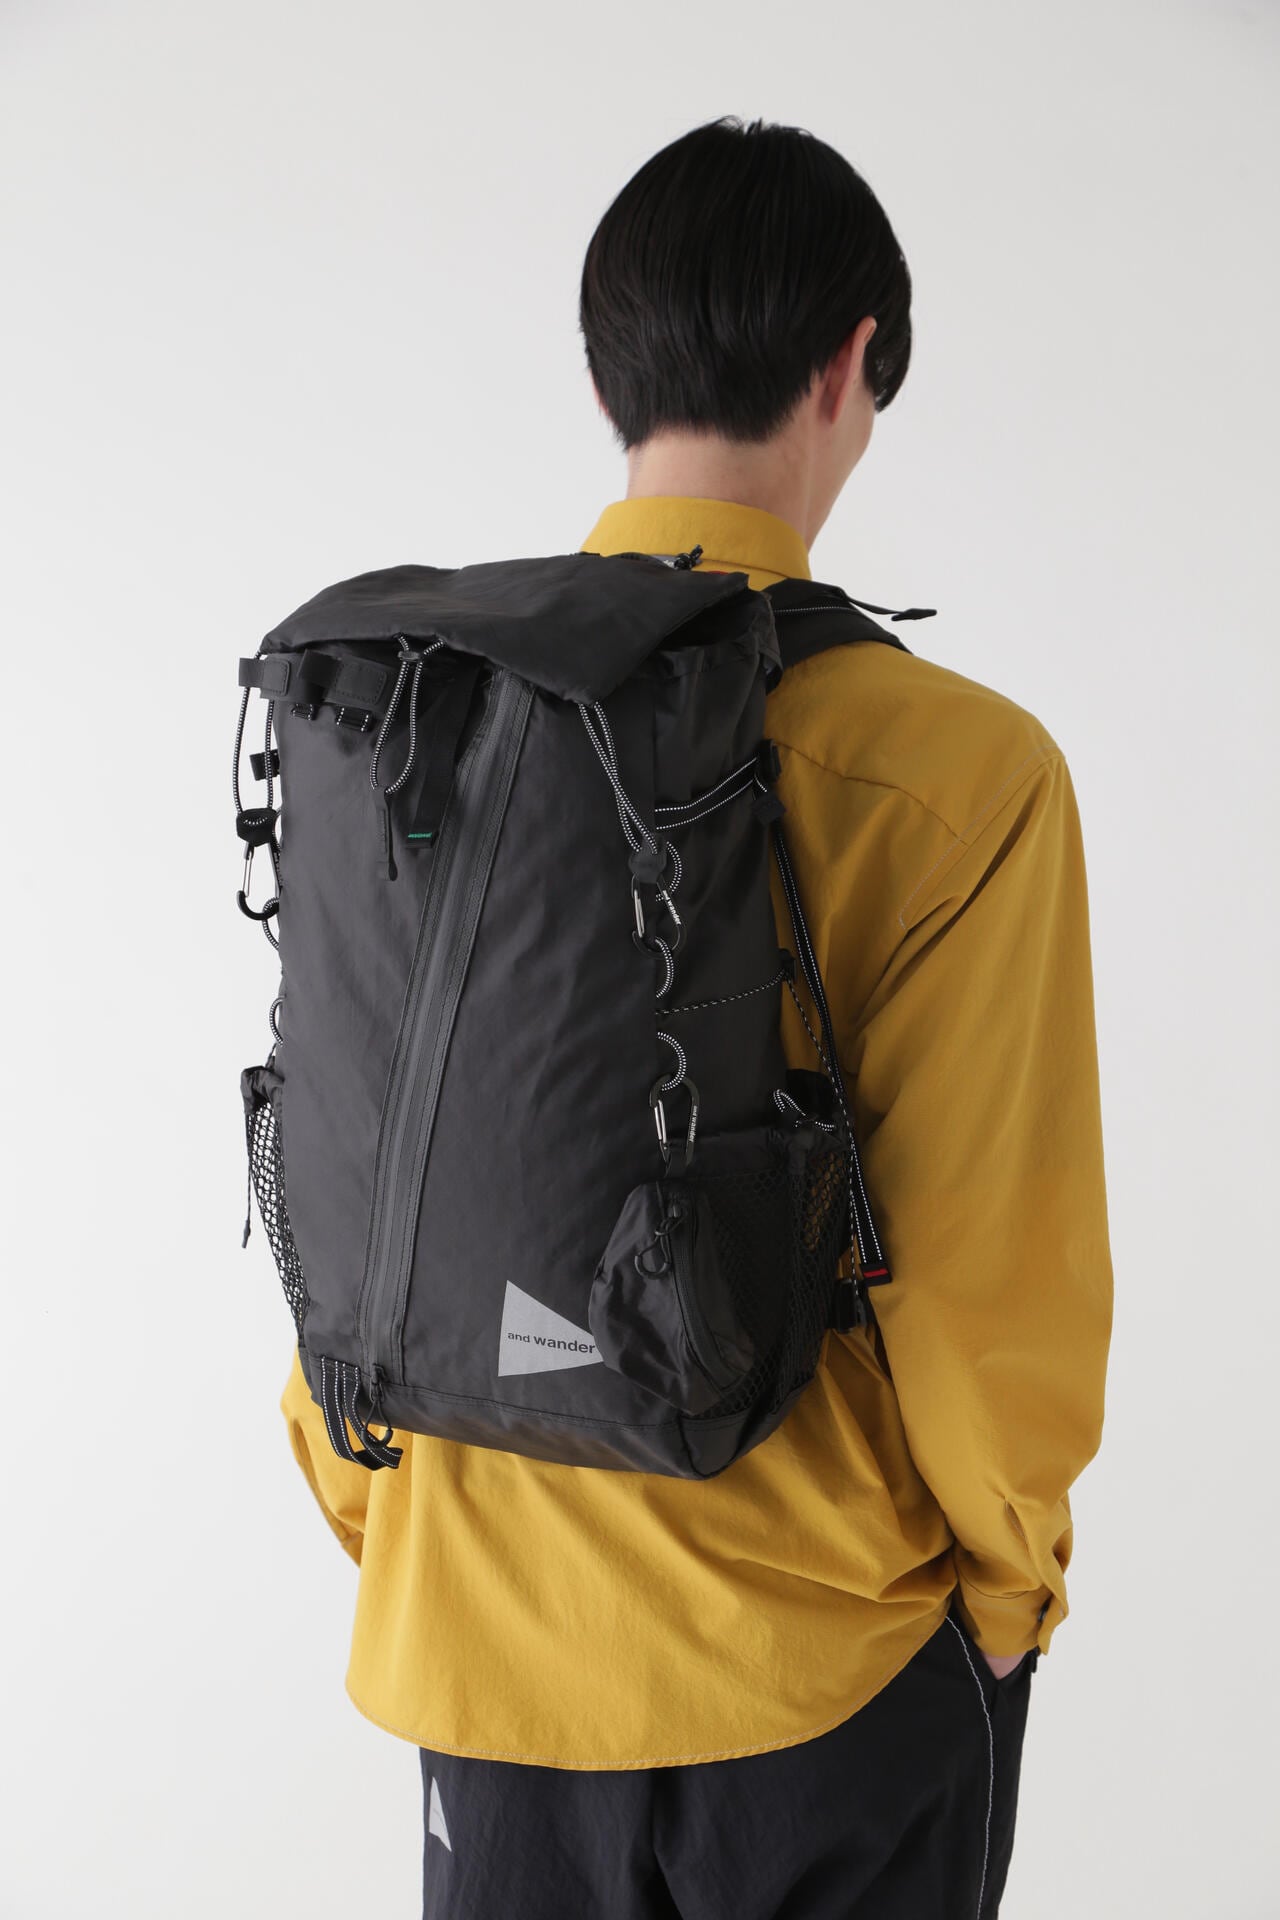 ECOPAK 30L backpack | backpack | and wander ONLINE STORE